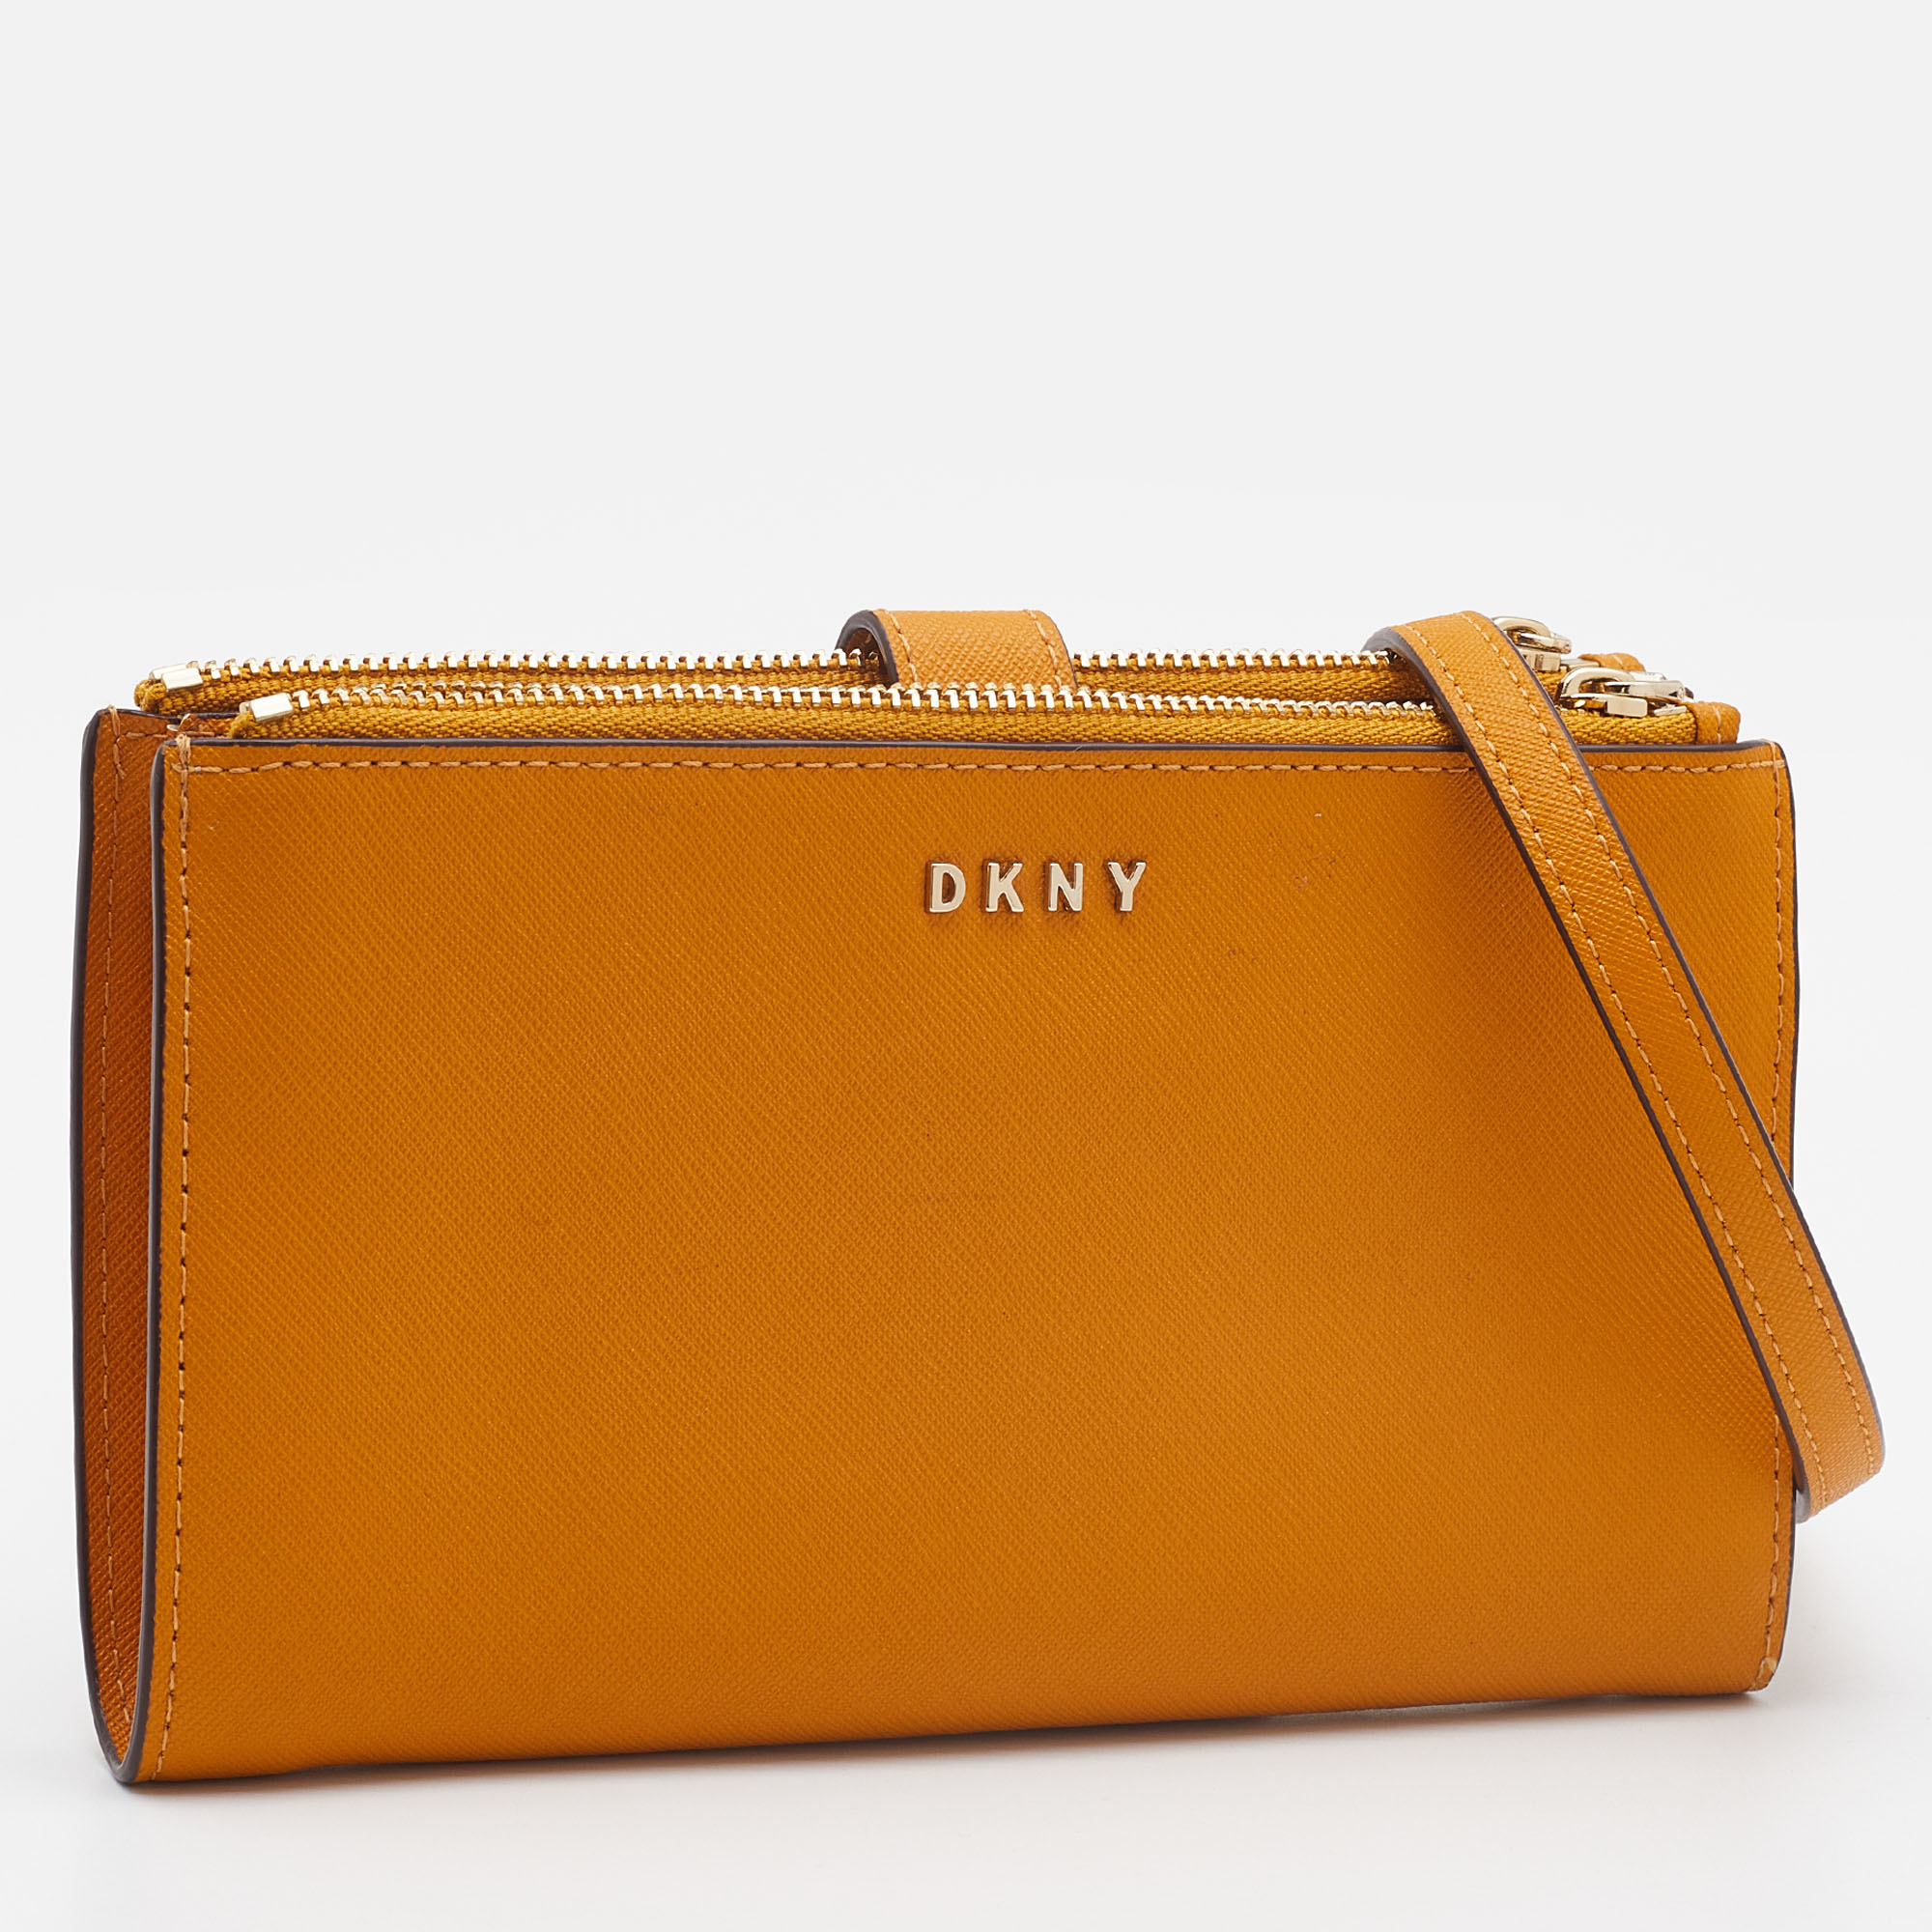 Dkny Mustard Leather Double Zip Crossbody Bag